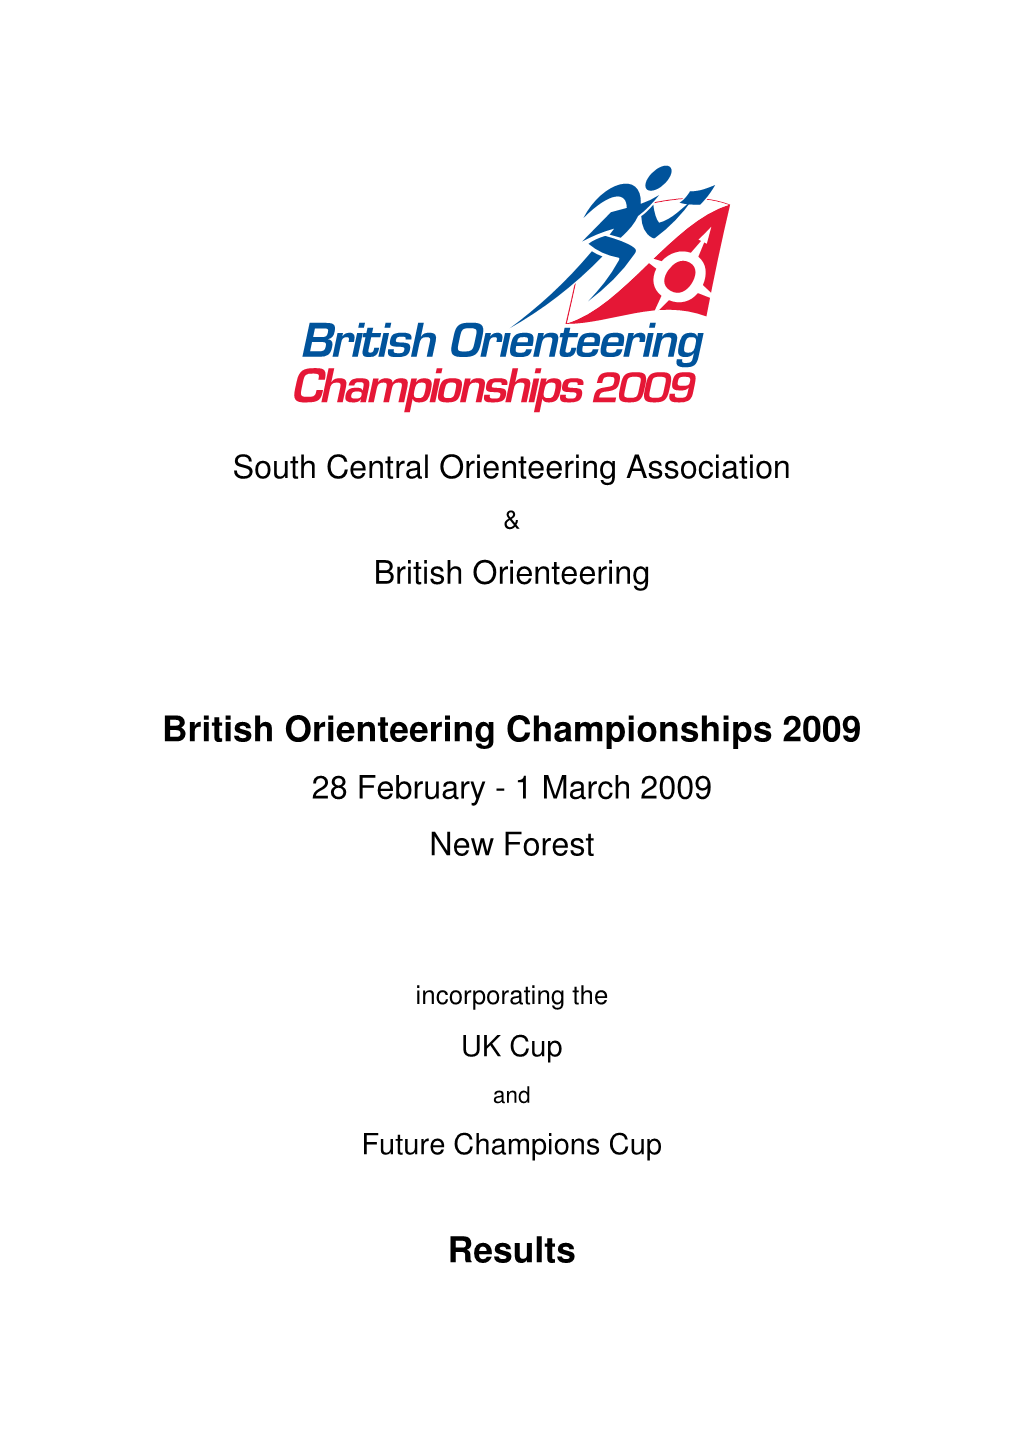 British Orienteering Championships 2009 Results